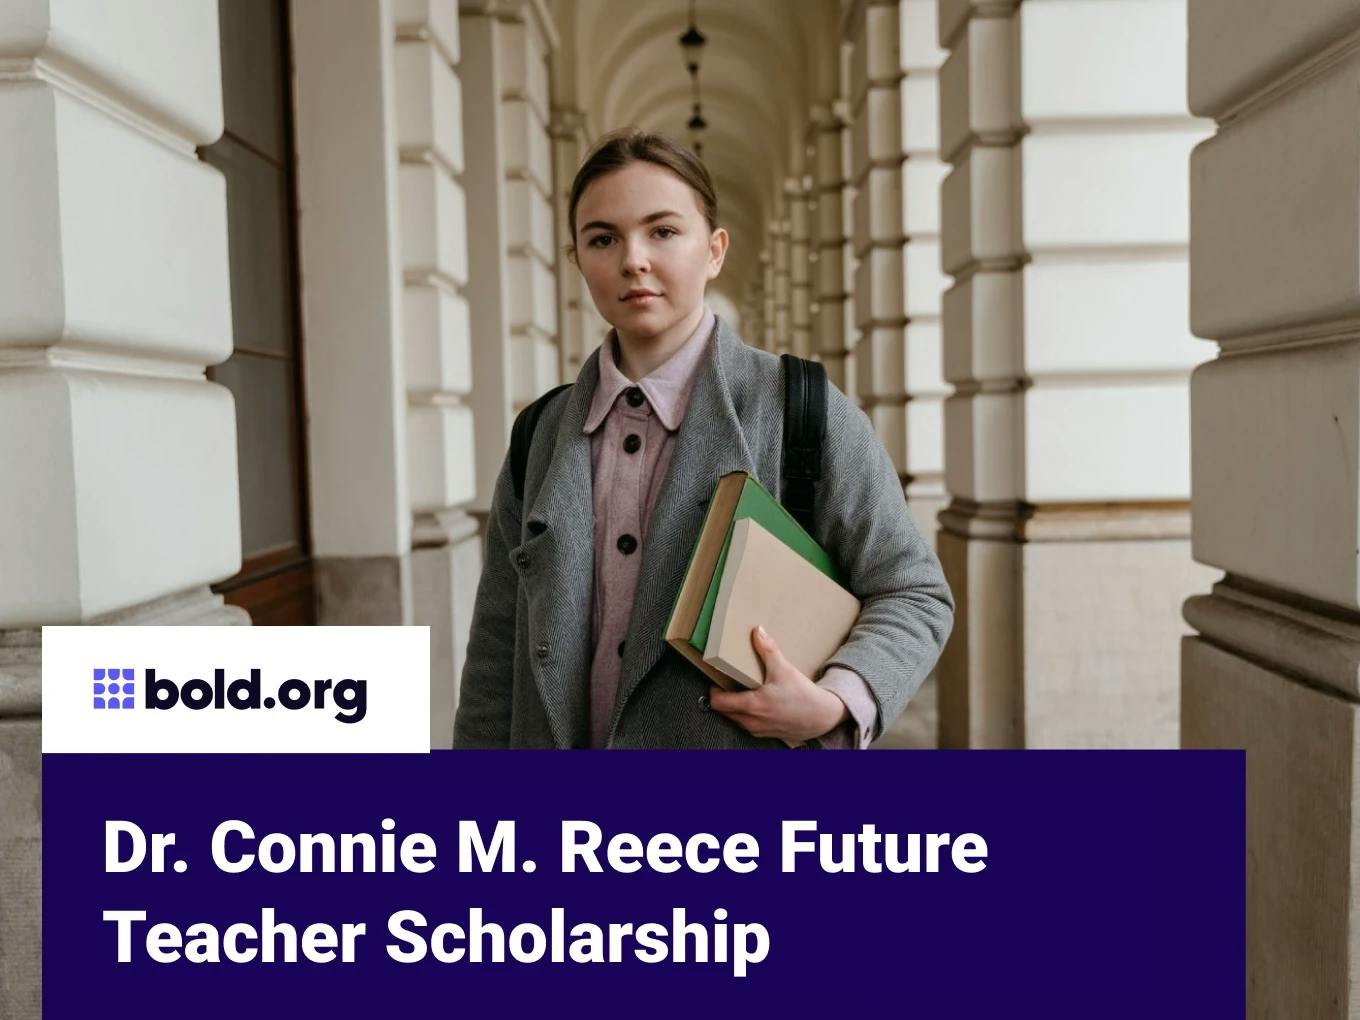 Dr. Connie M. Reece Future Teacher Scholarship